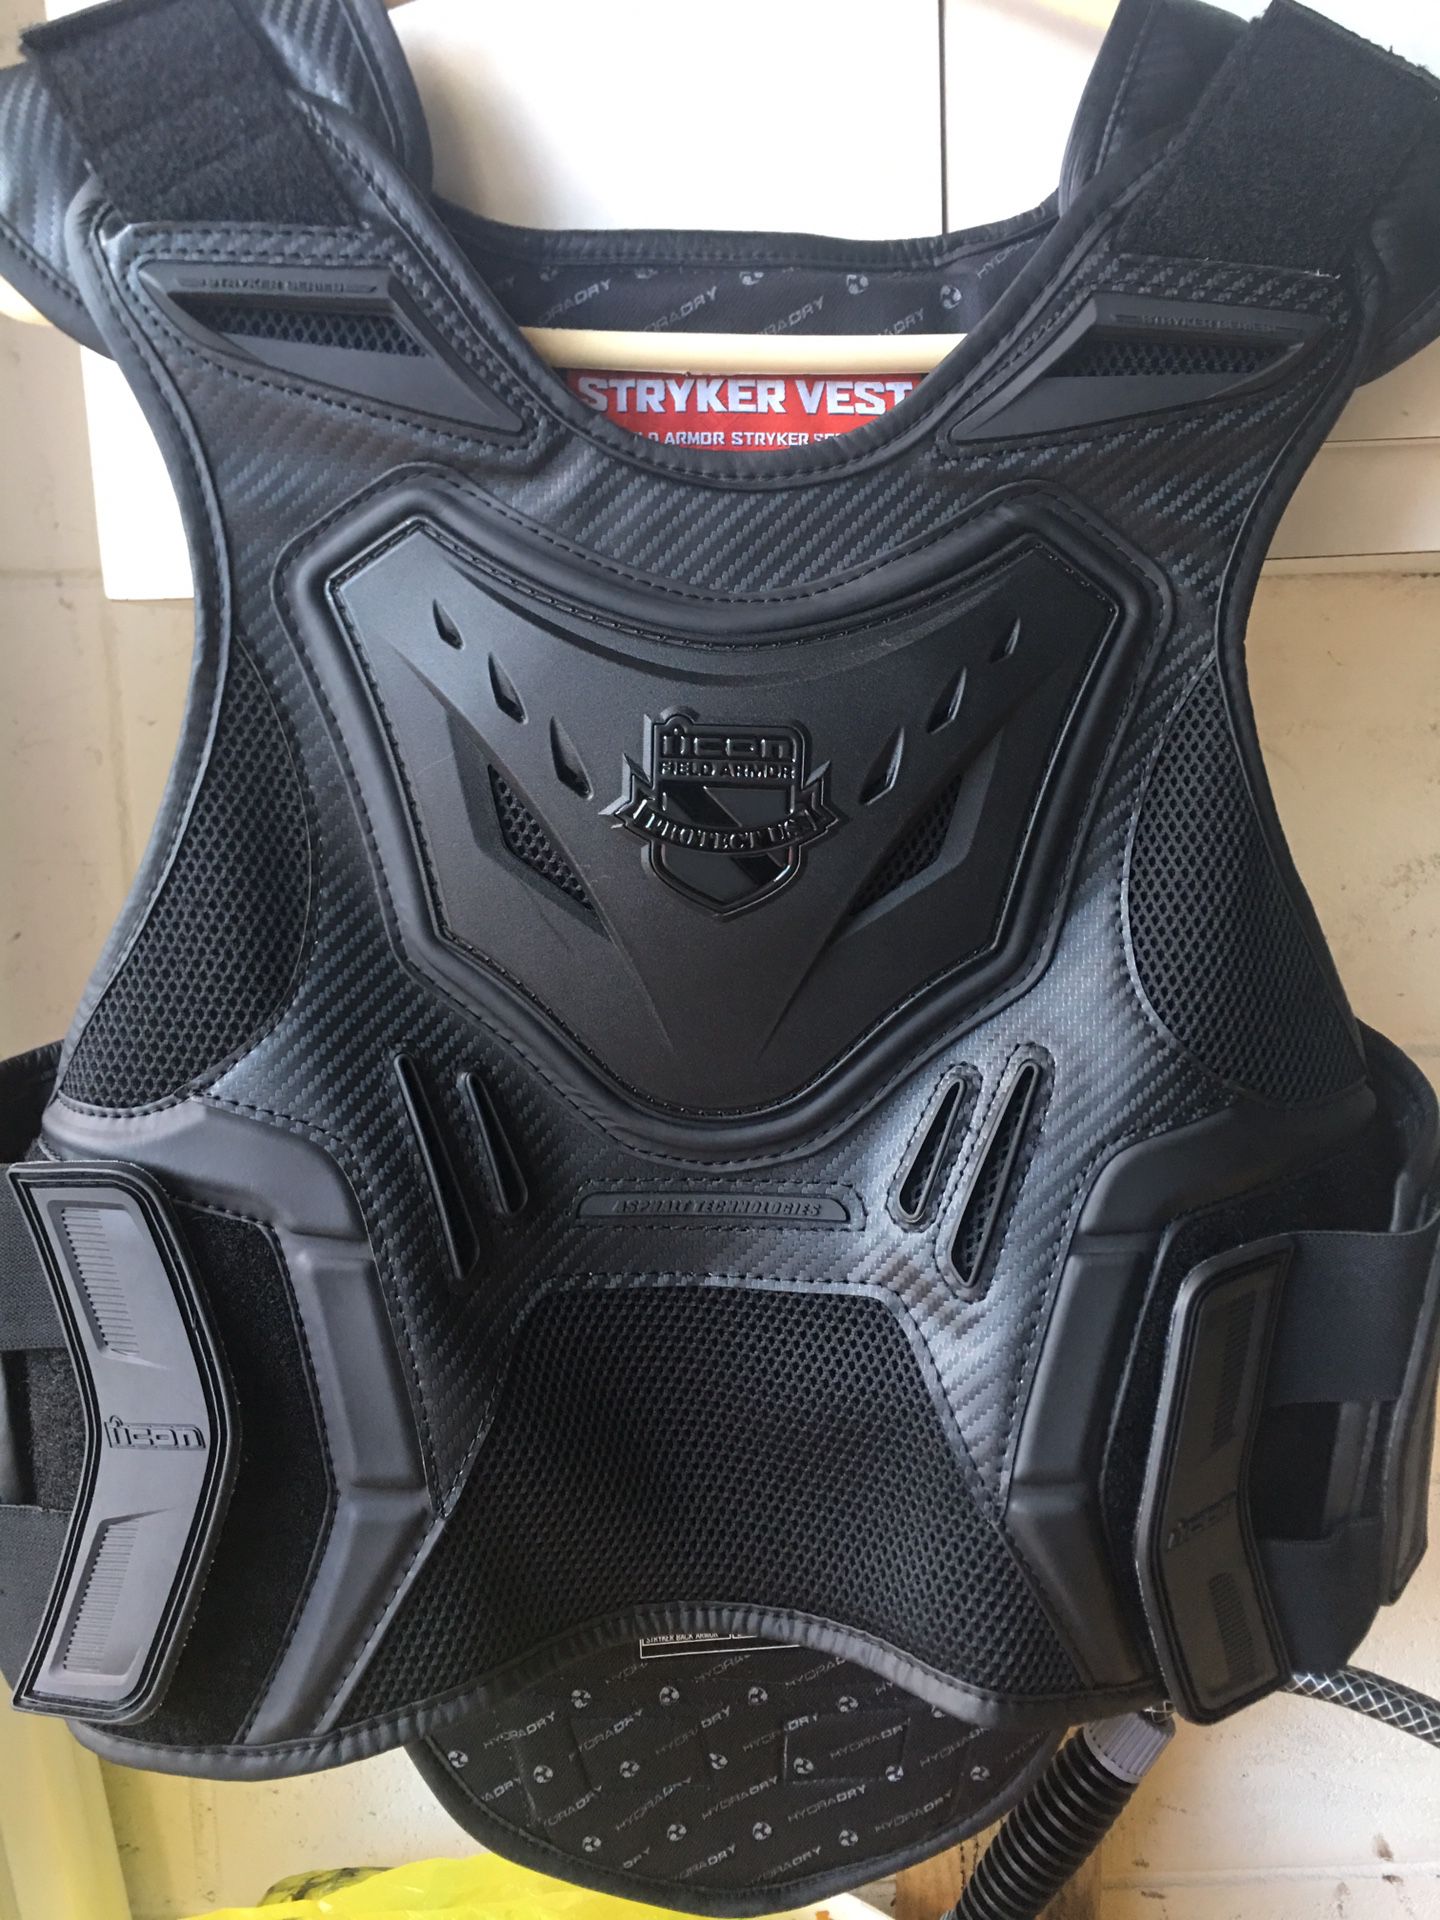 Armor vest brand new size L / XL